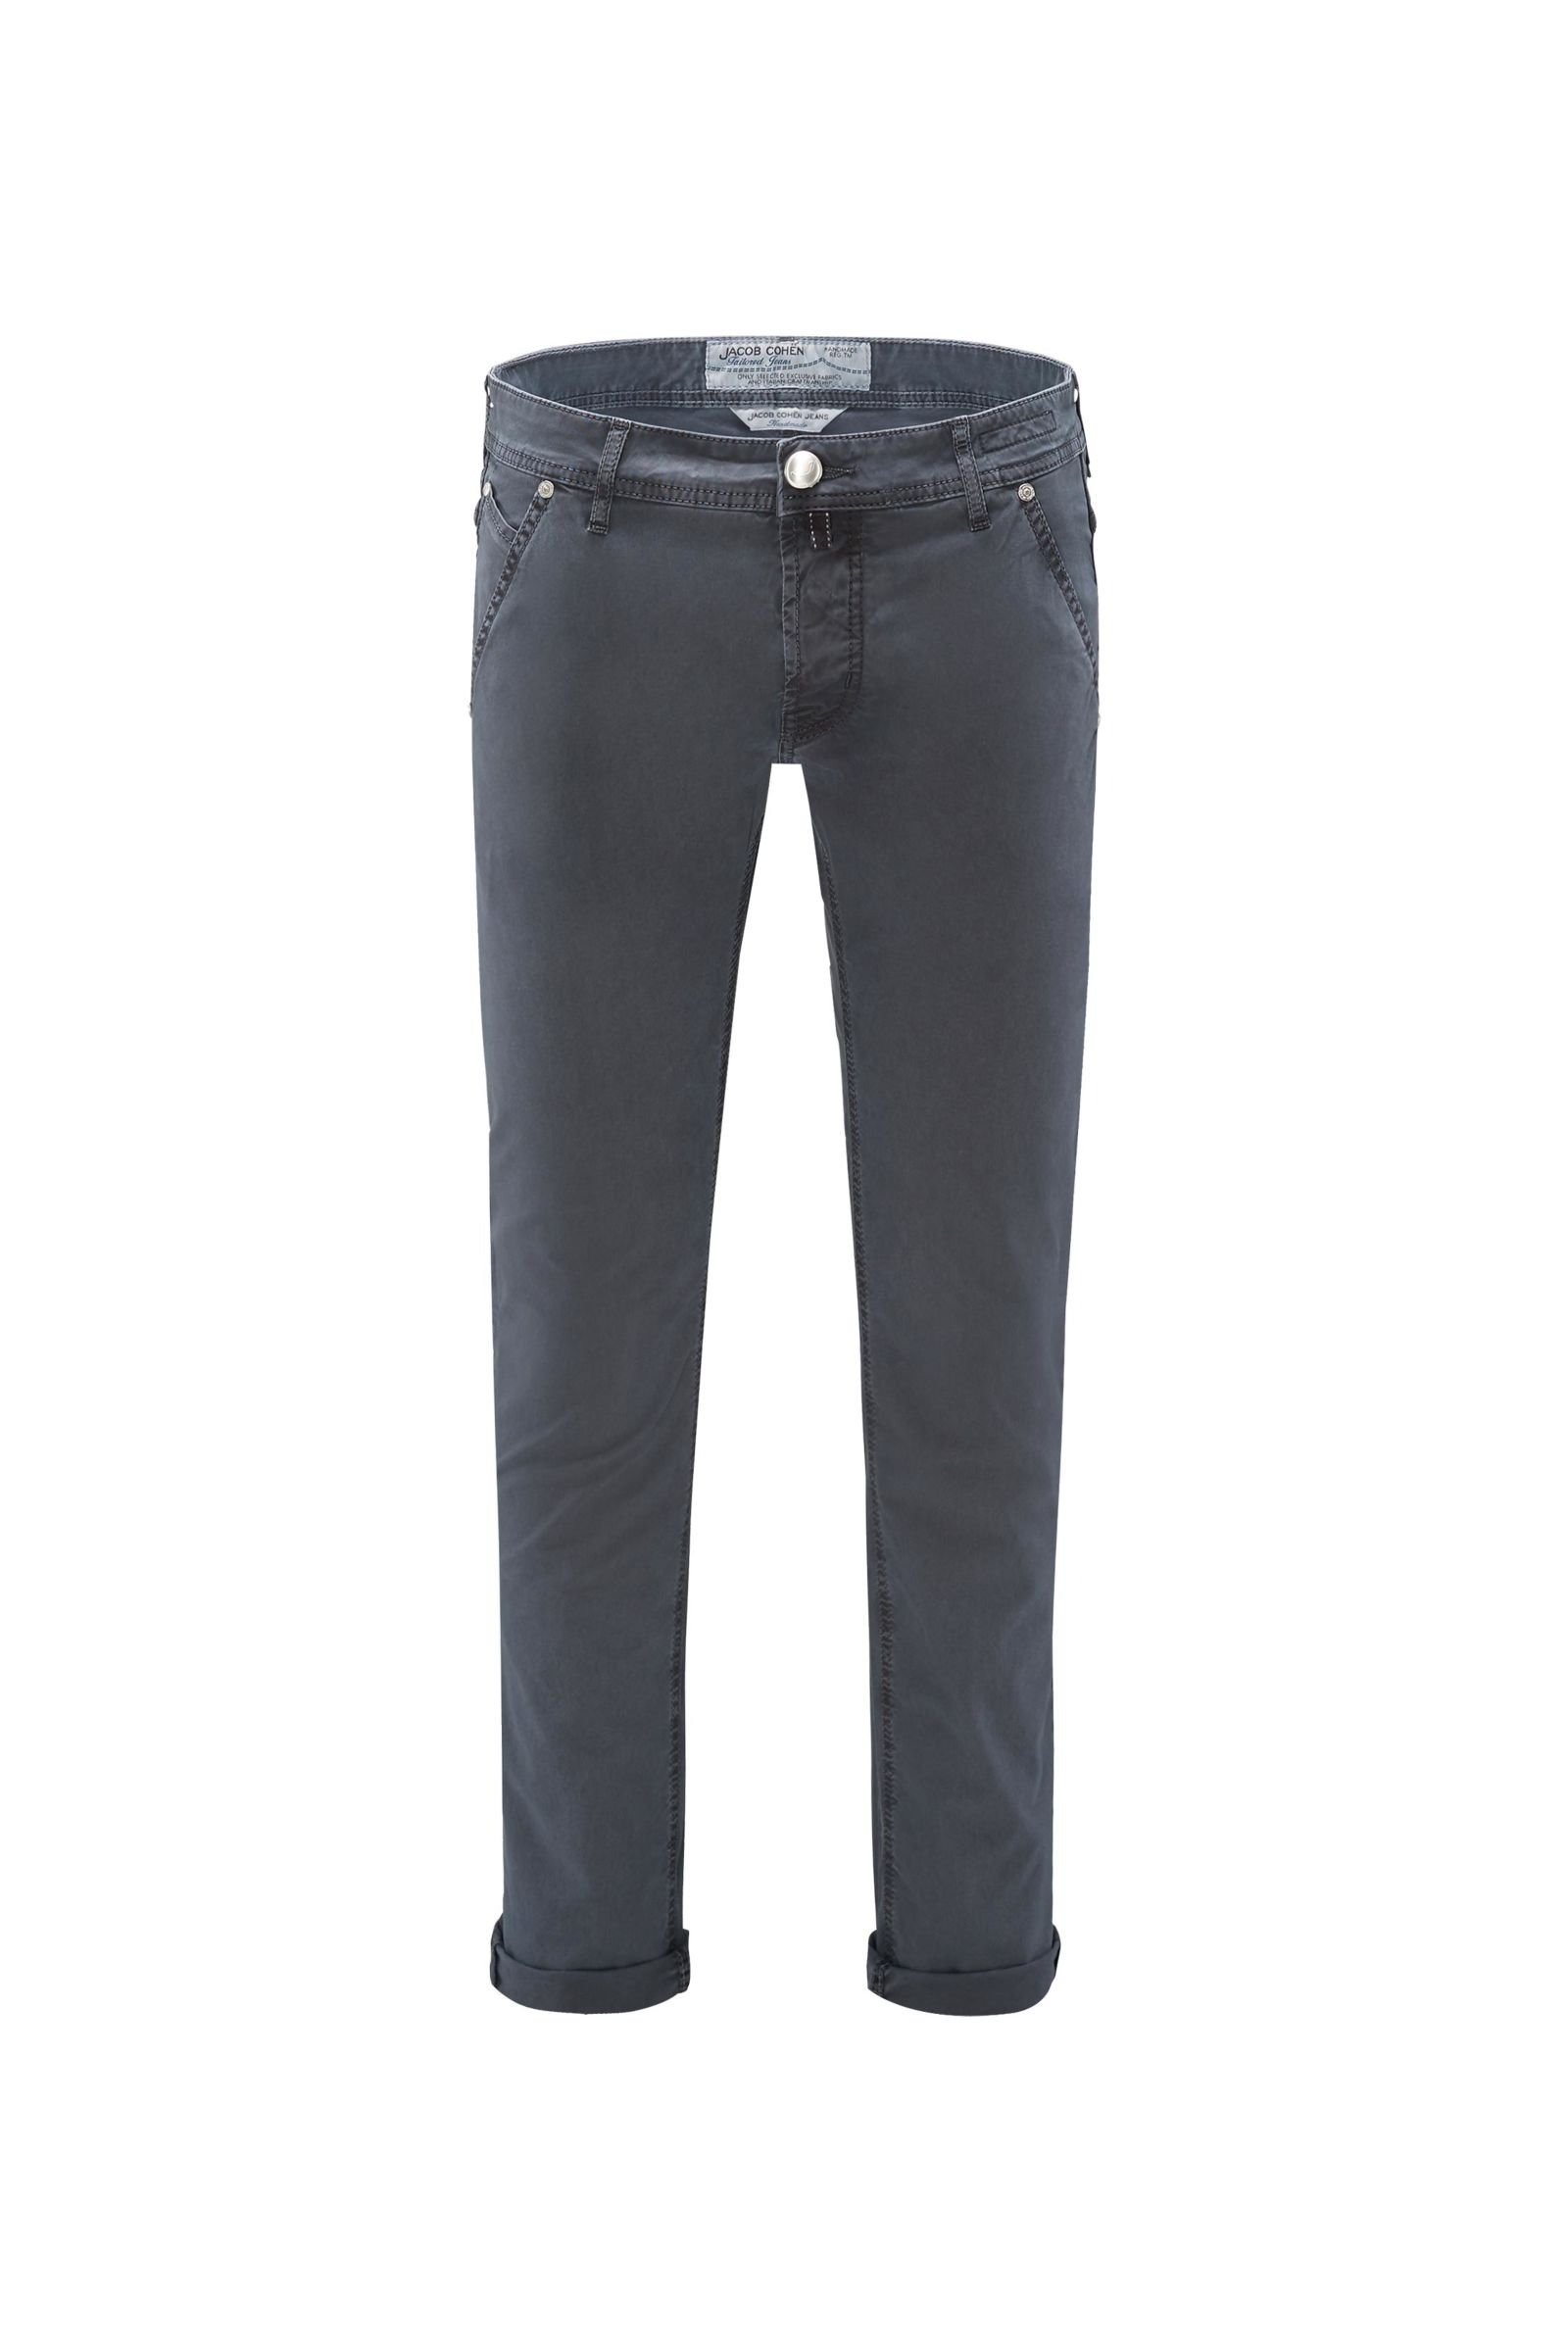 Cotton trousers 'PW613 Comfort' dark grey